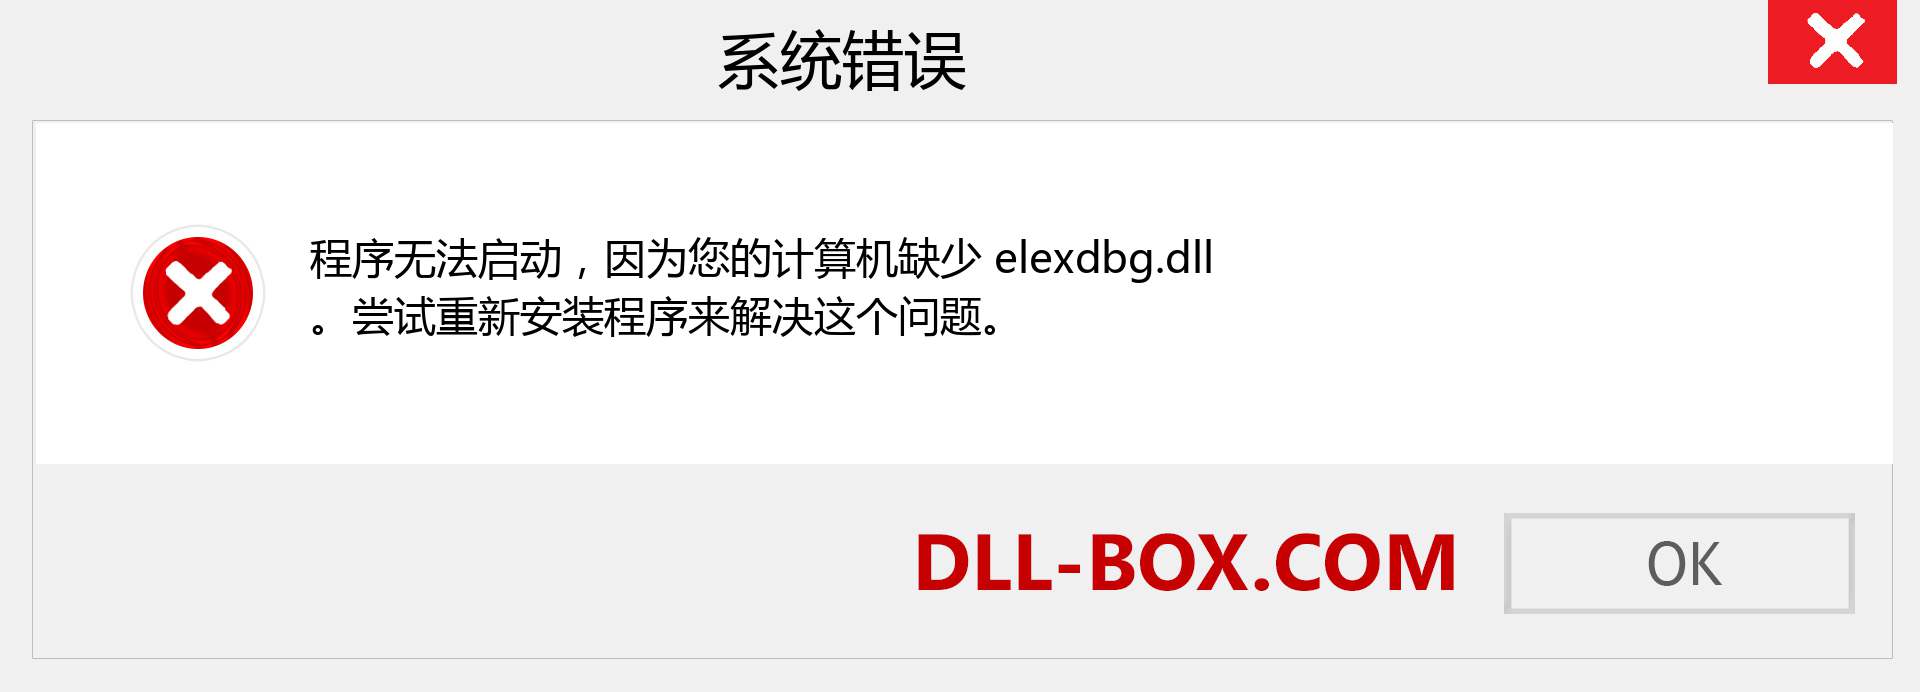 elexdbg.dll 文件丢失？。 适用于 Windows 7、8、10 的下载 - 修复 Windows、照片、图像上的 elexdbg dll 丢失错误